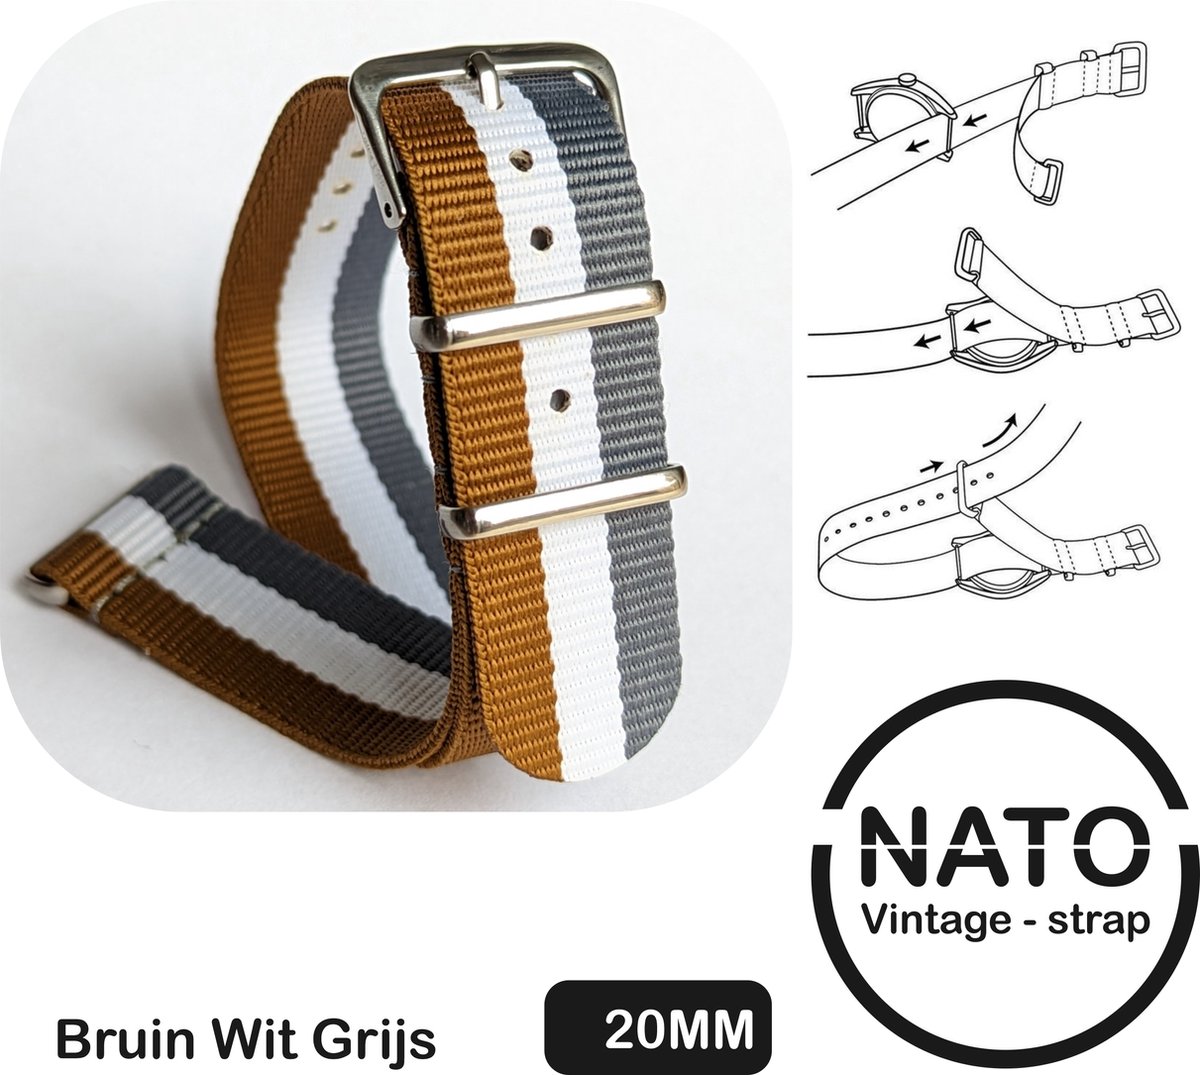 20mm Premium Nato Strap Bruin Wit Grijs - Vintage James Bond - Nato Strap collectie - Mannen - Vrouwen - Horlogeband - 20 mm bandbreedte voor oa. Seiko Rolex Omega Casio en Citizen